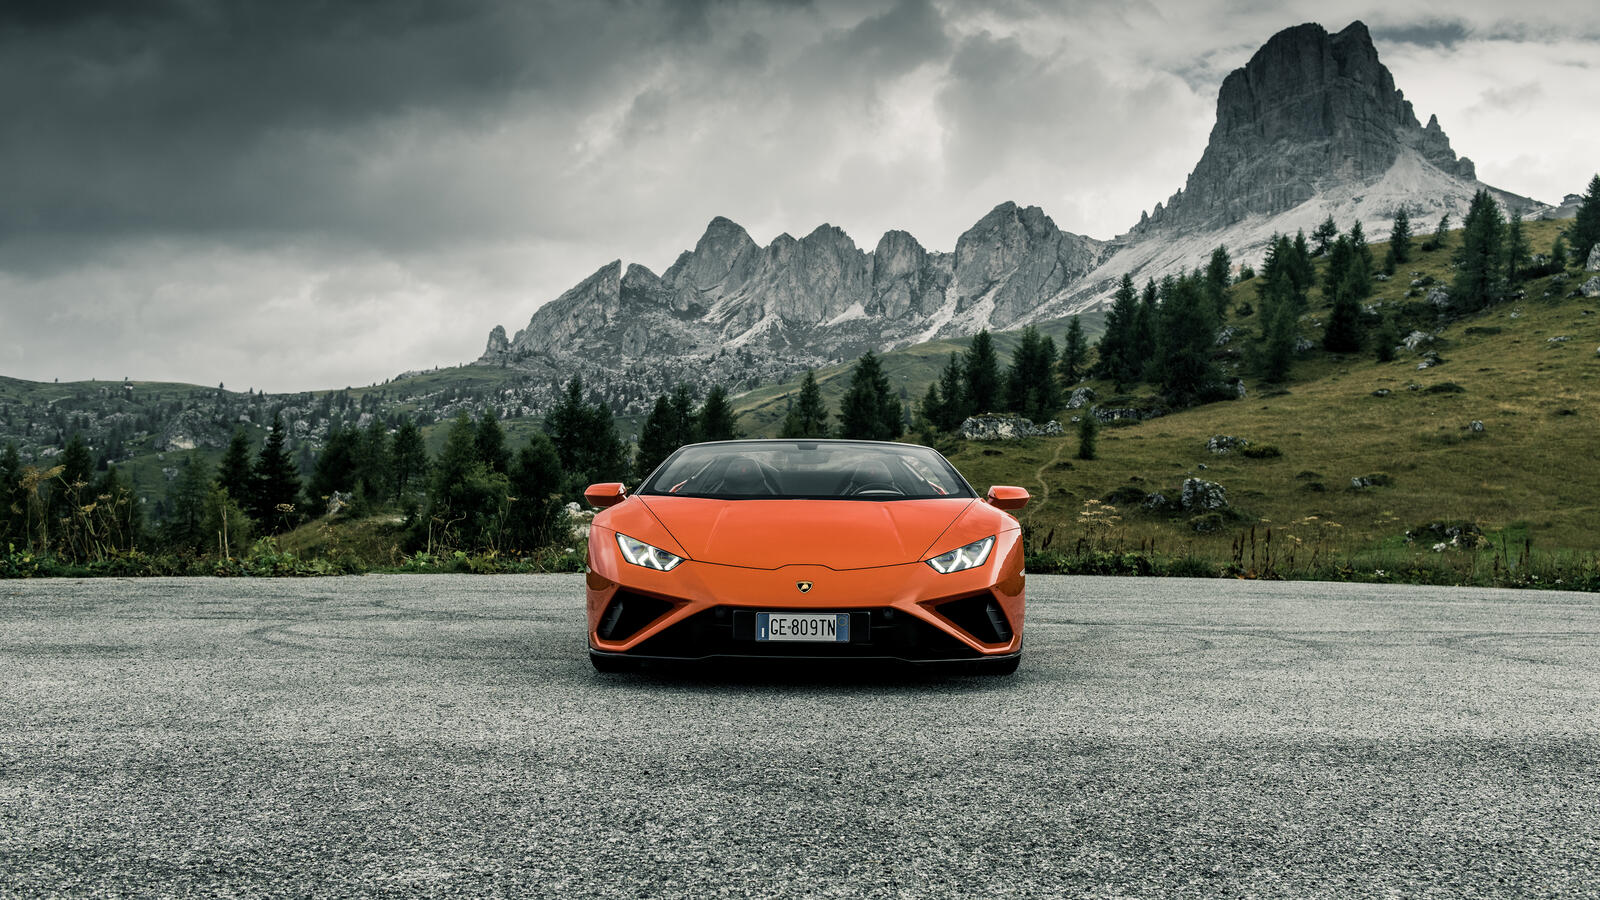 Free photo Orange Lamborghini Huracan Evo Spyder against a mountain backdrop